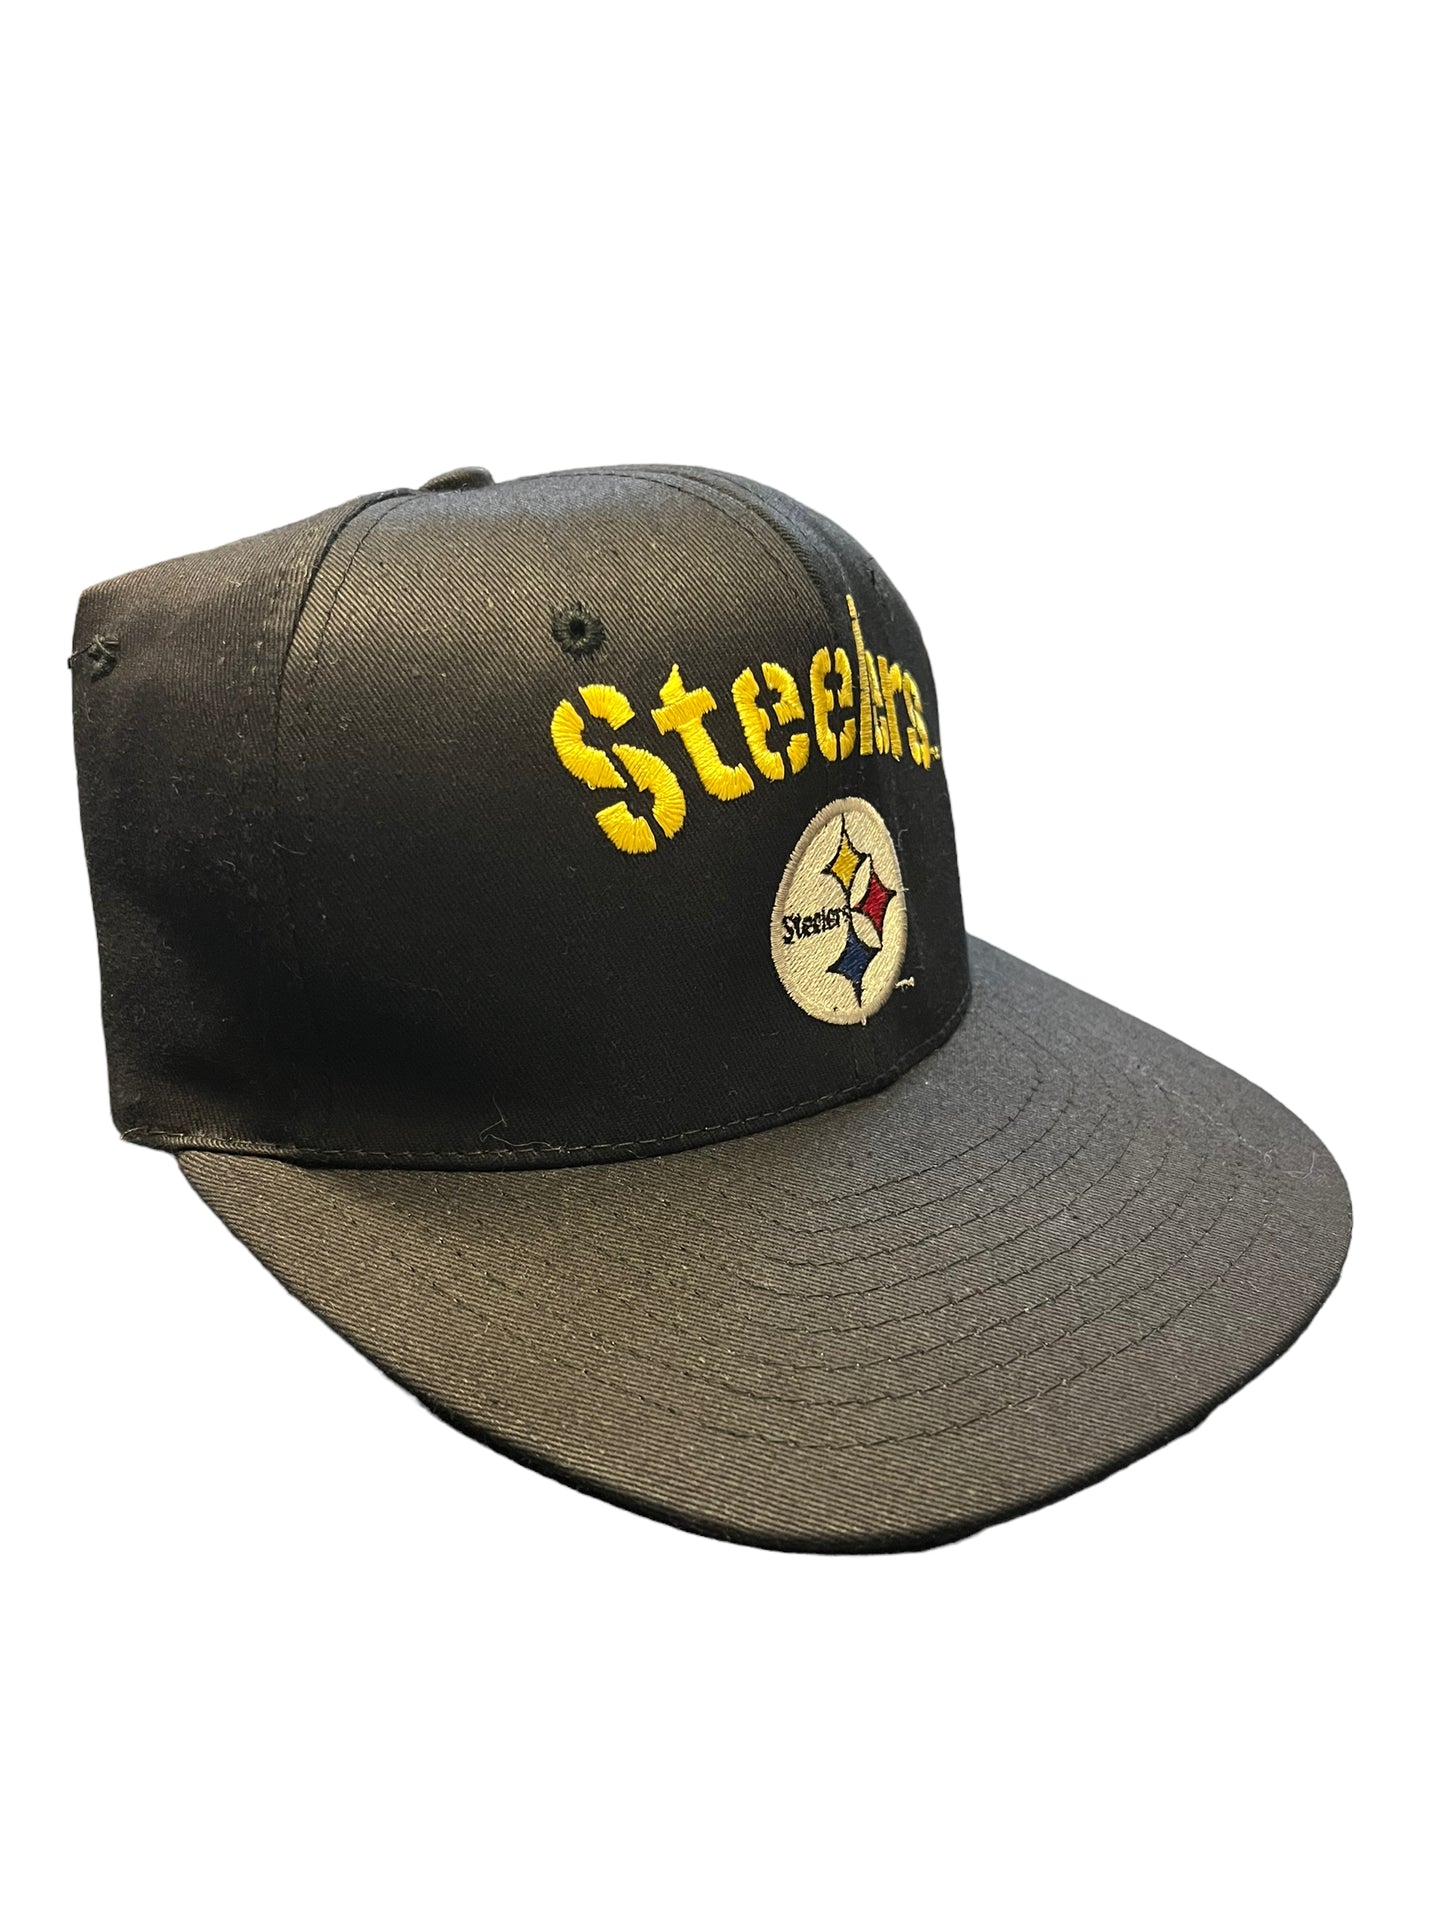 Vintage Steelers Snapback